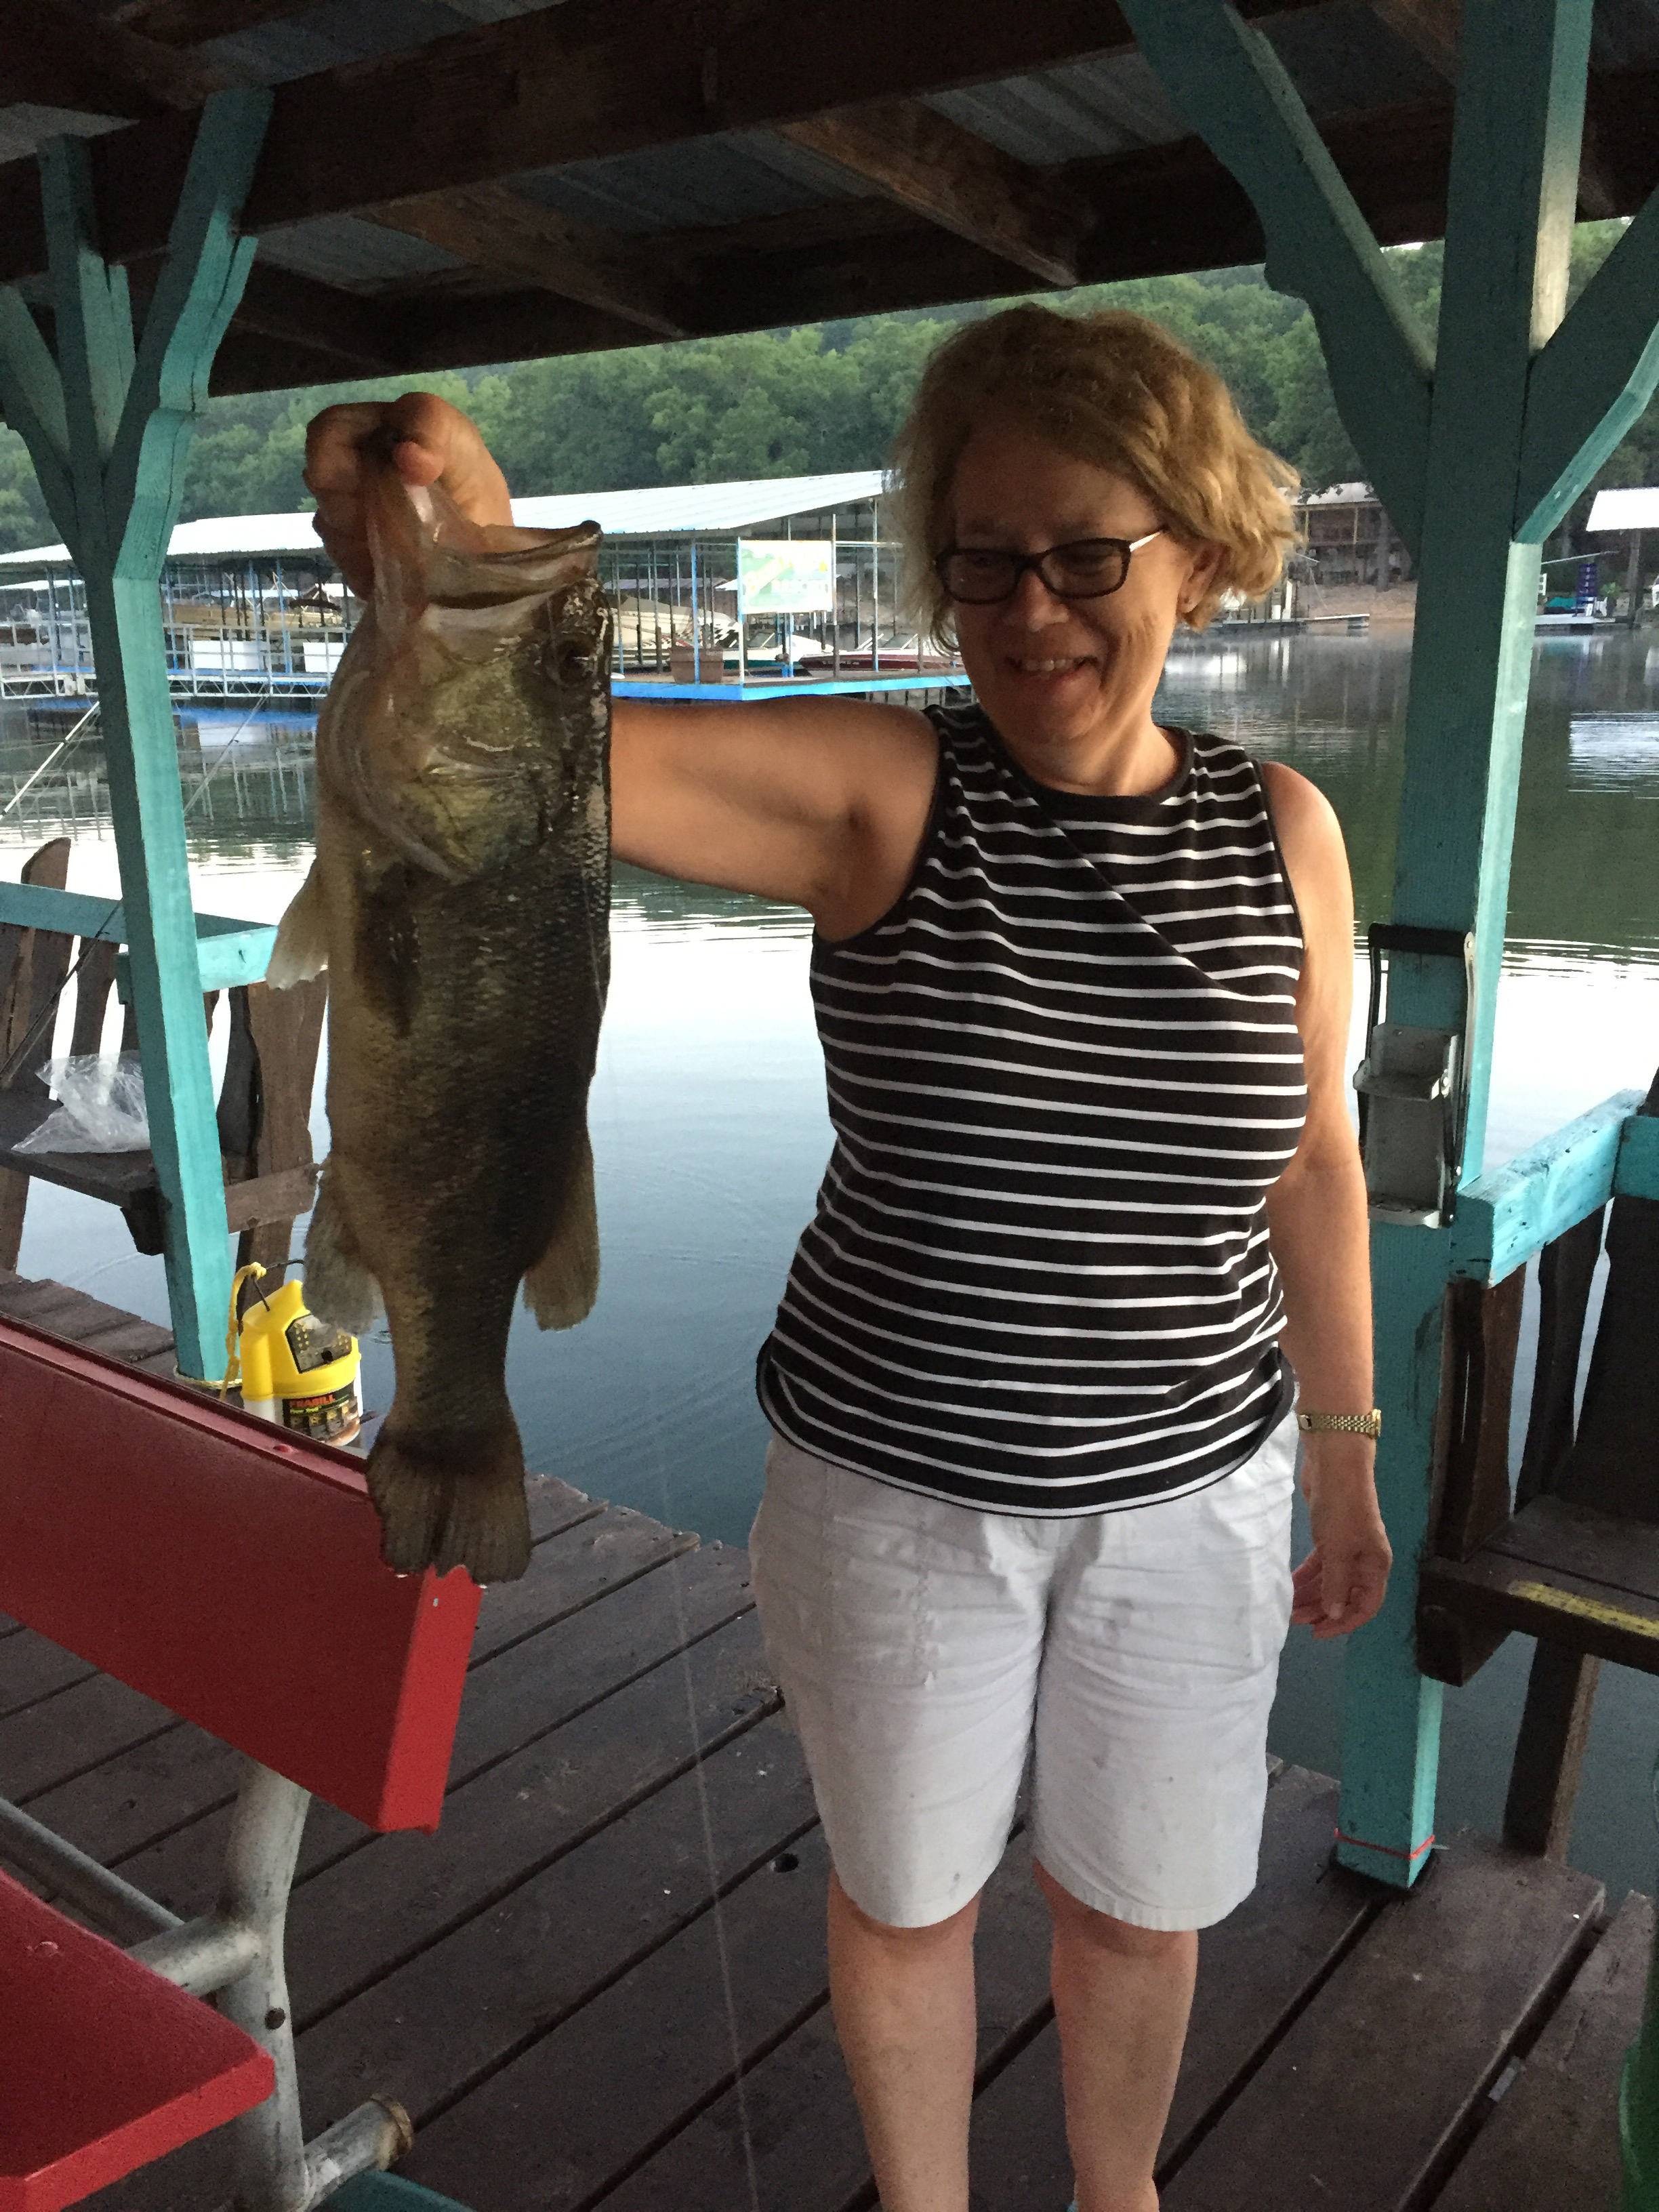 Large bass caught on fishing dock